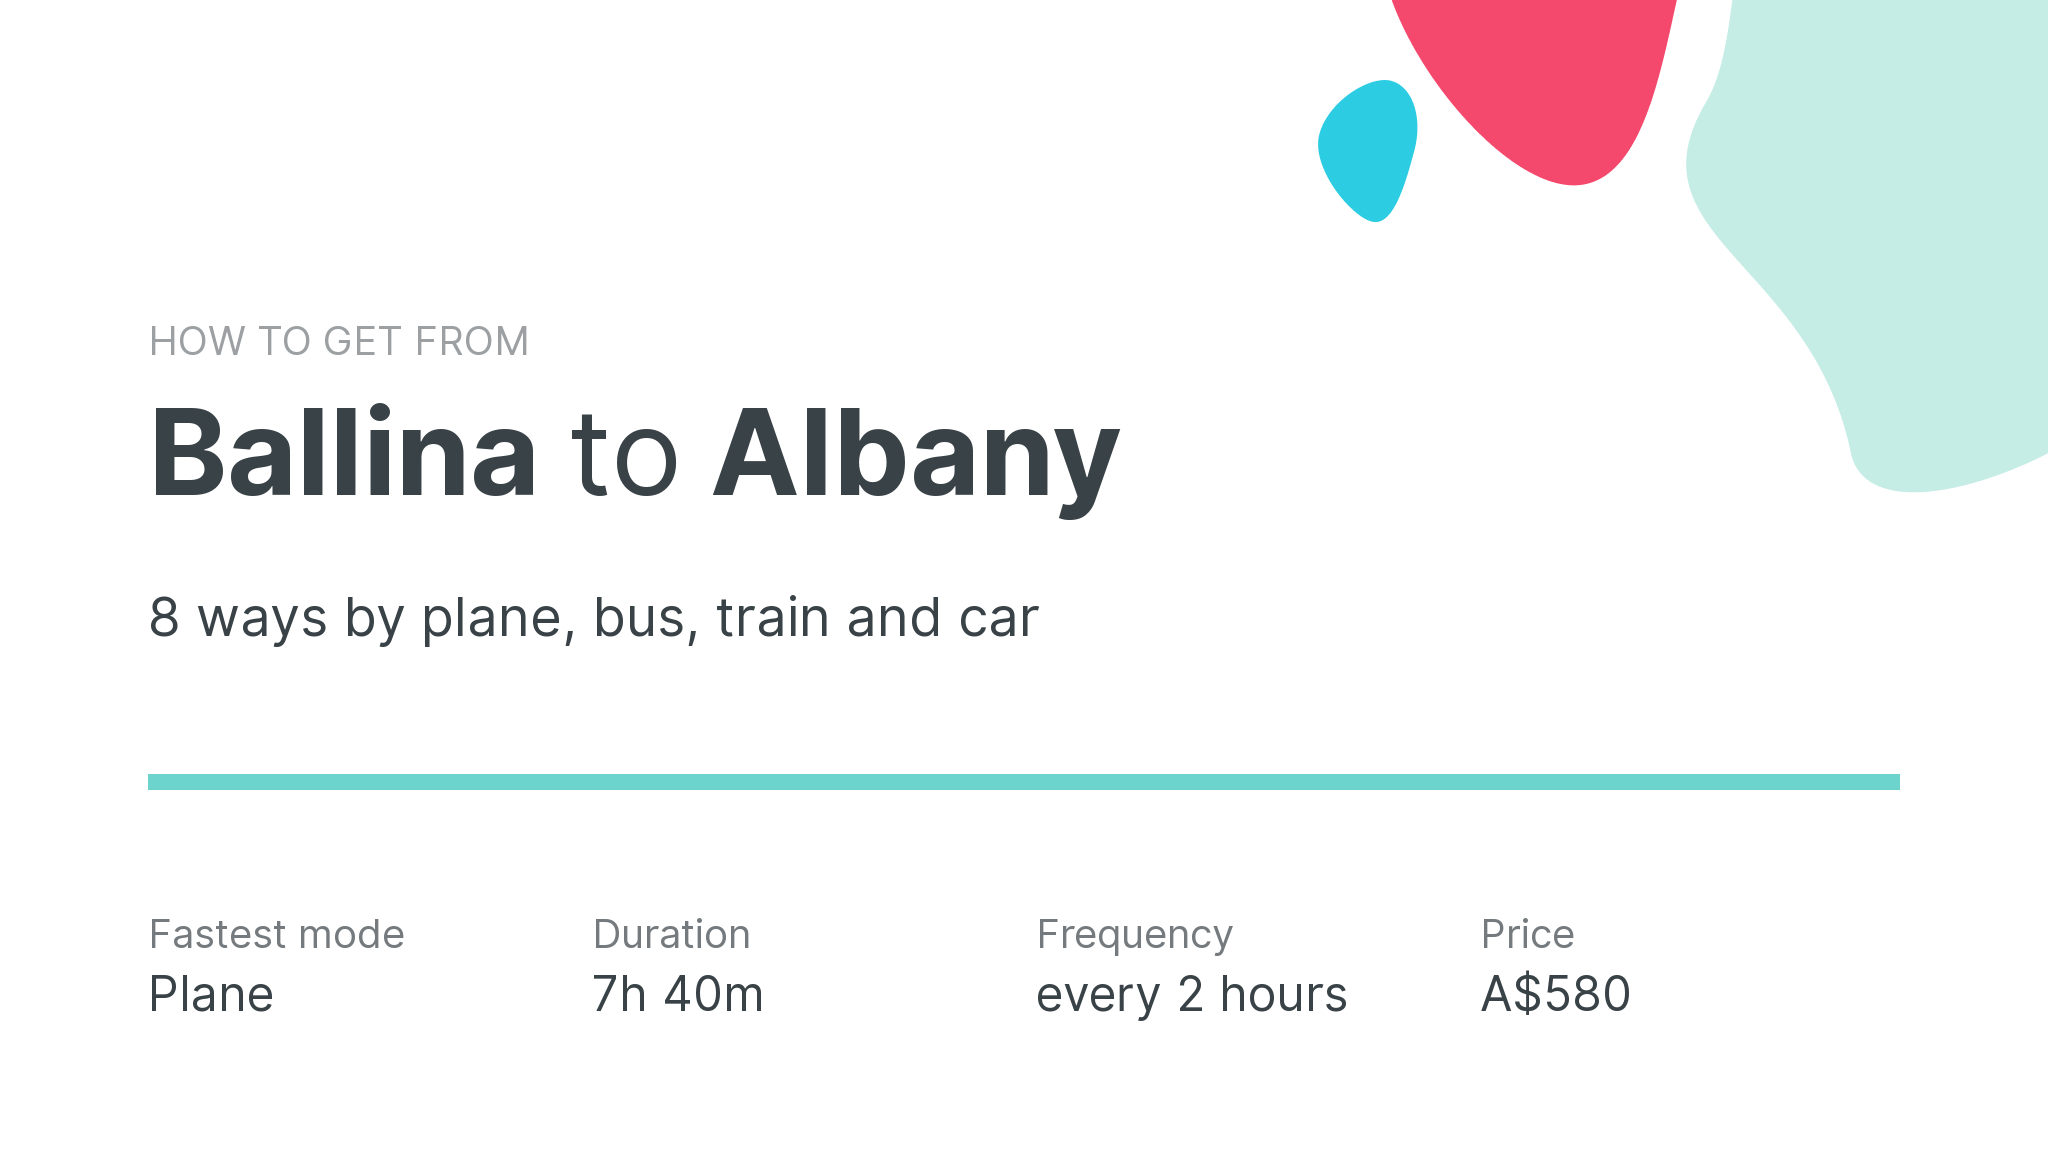 How do I get from Ballina to Albany